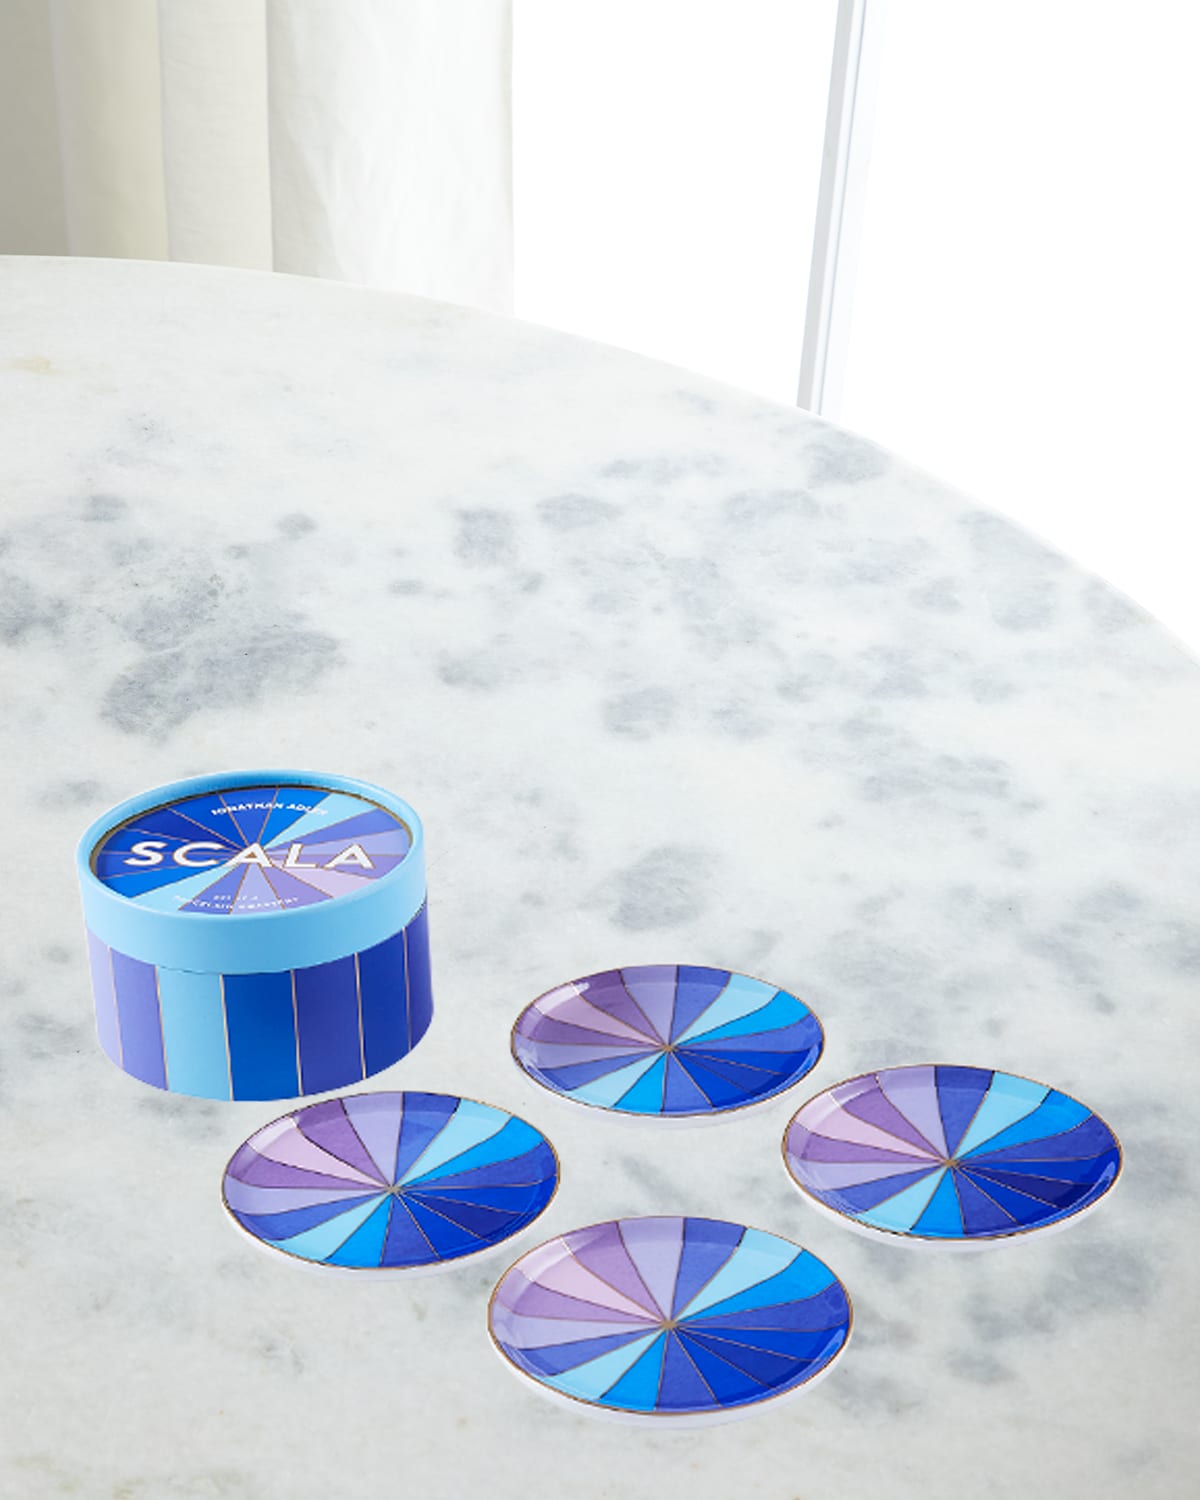 Jonathan Adler Scala Coasters, Set Of 4 In Blue